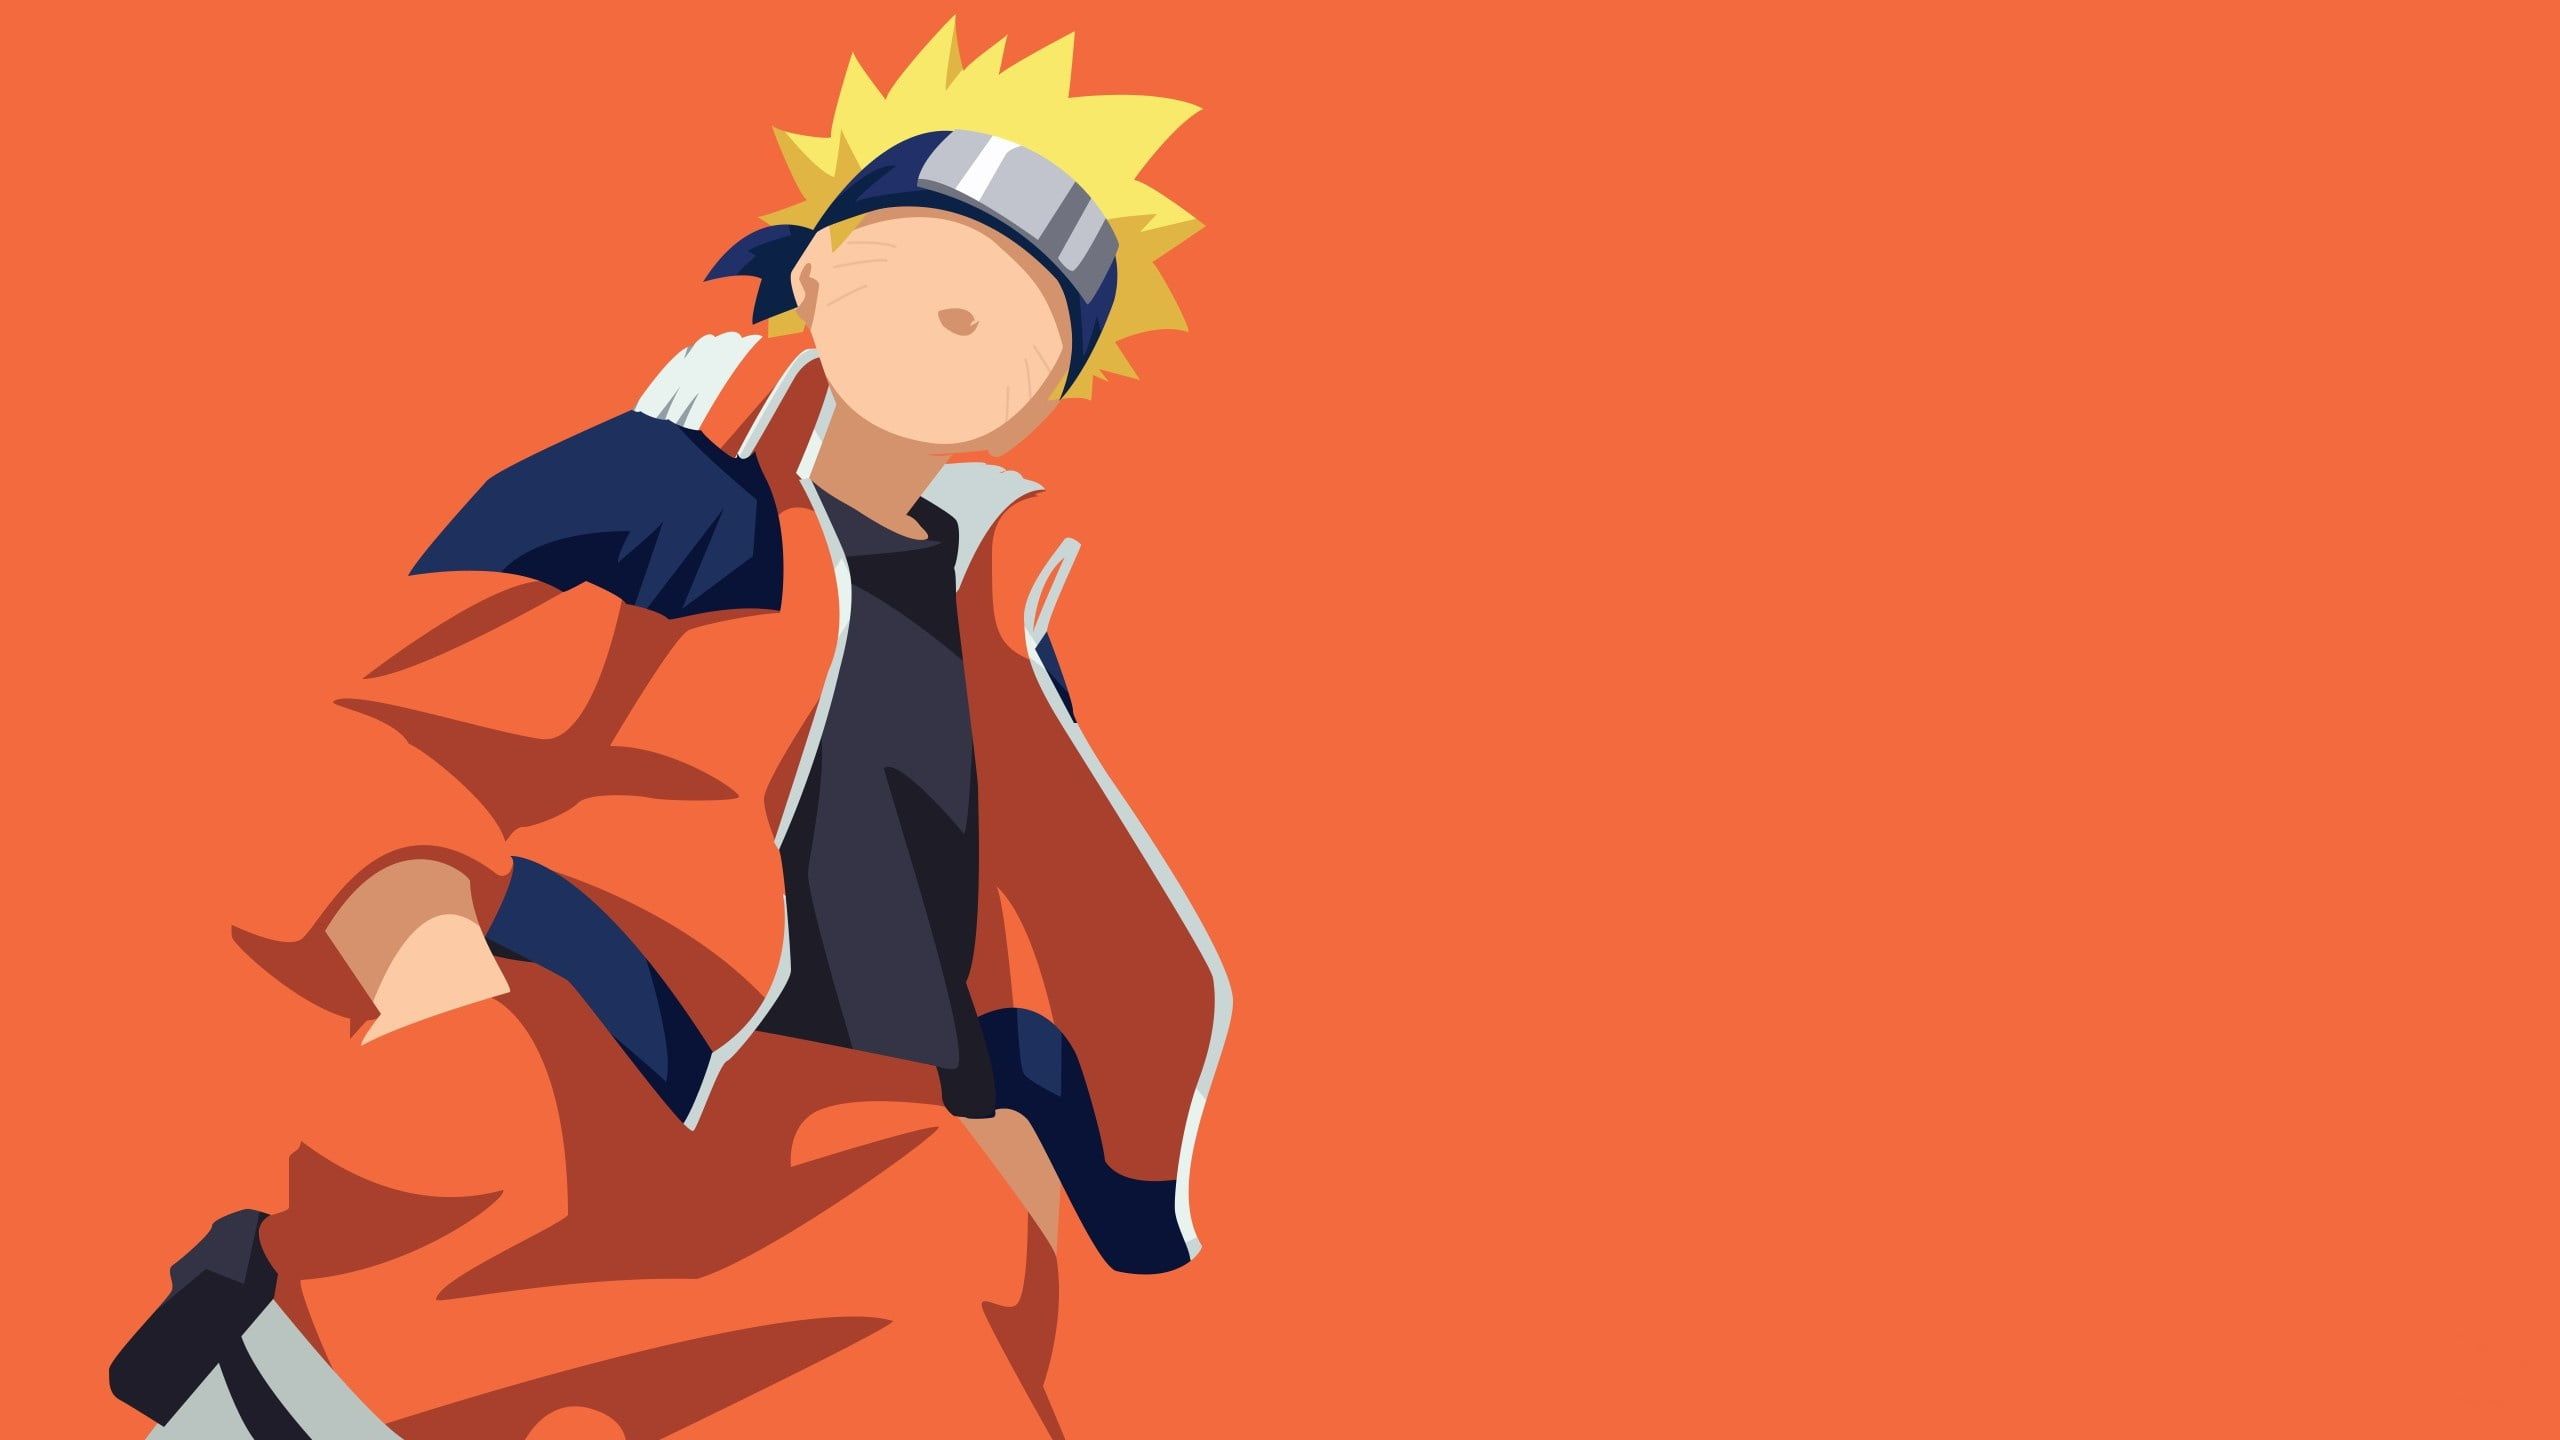 game #Naruto #minimalism #anime #orange #ninja #hero #asian #manga #hokage #shinobi #japanese Naruto Shippuden Uzuma. Animes wallpaper, Wallpaper fofinho, Anime